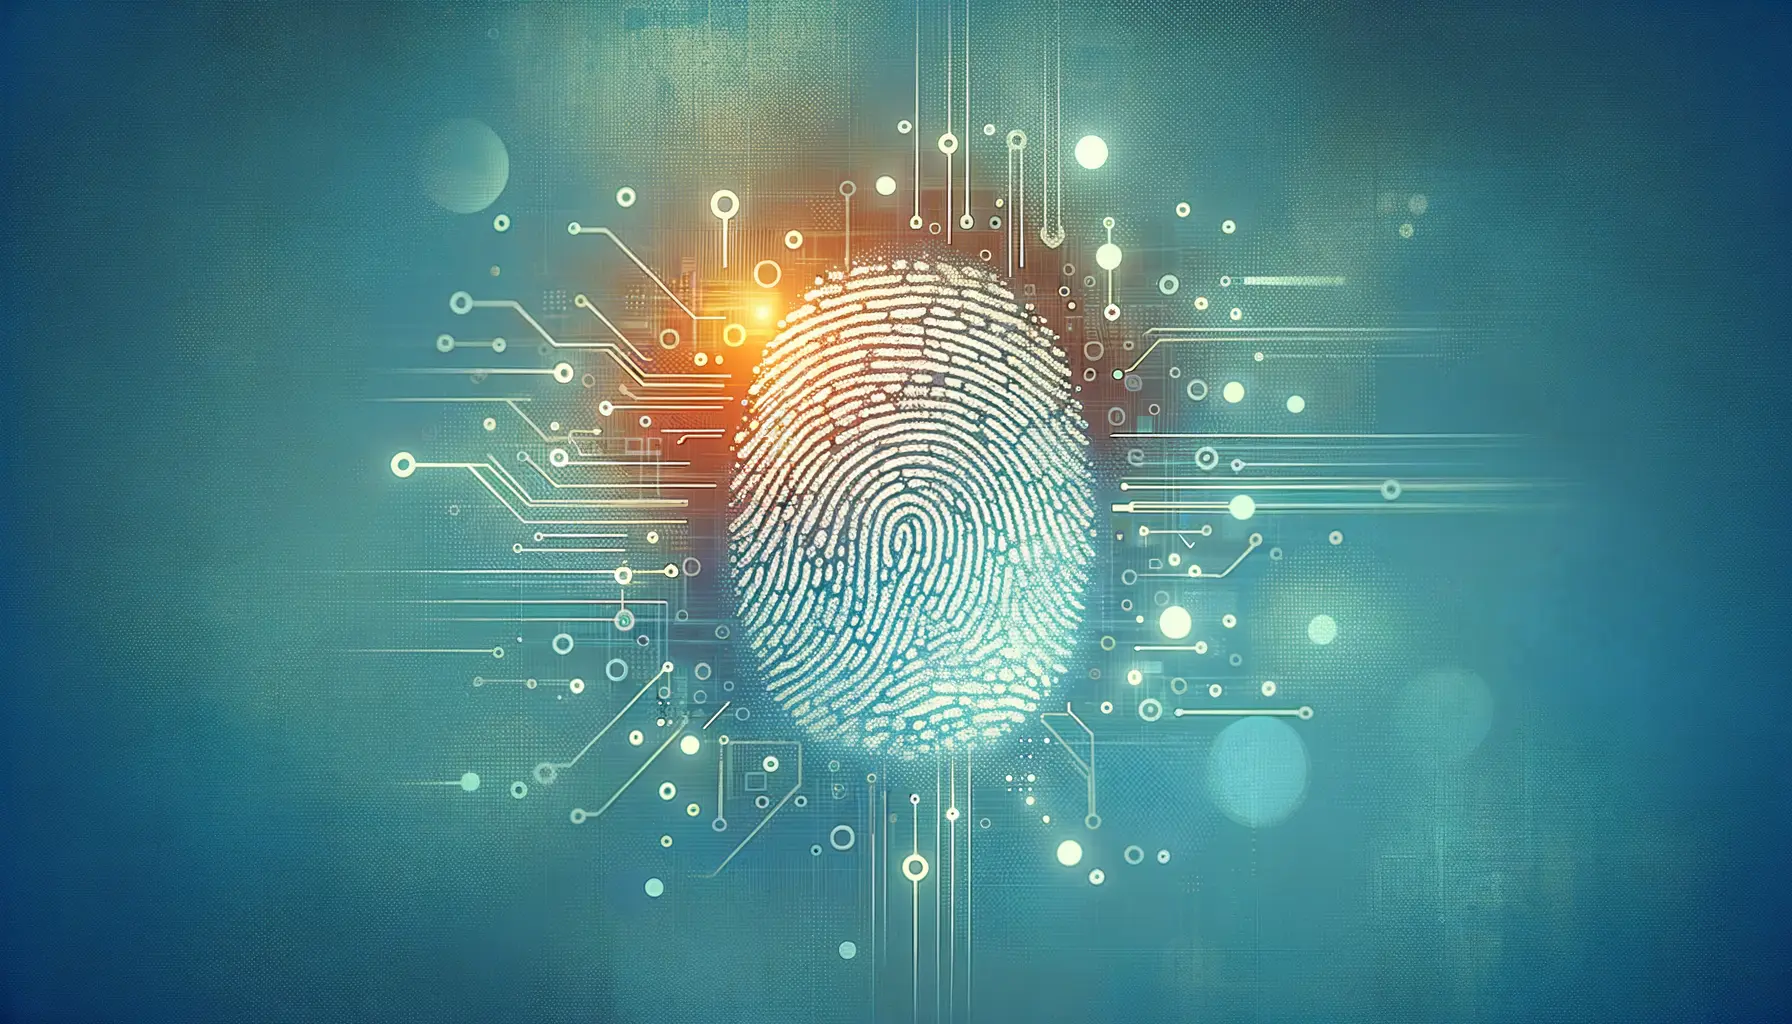 Windows Hello Fingerprint Security Breach: Measures You Need to Take